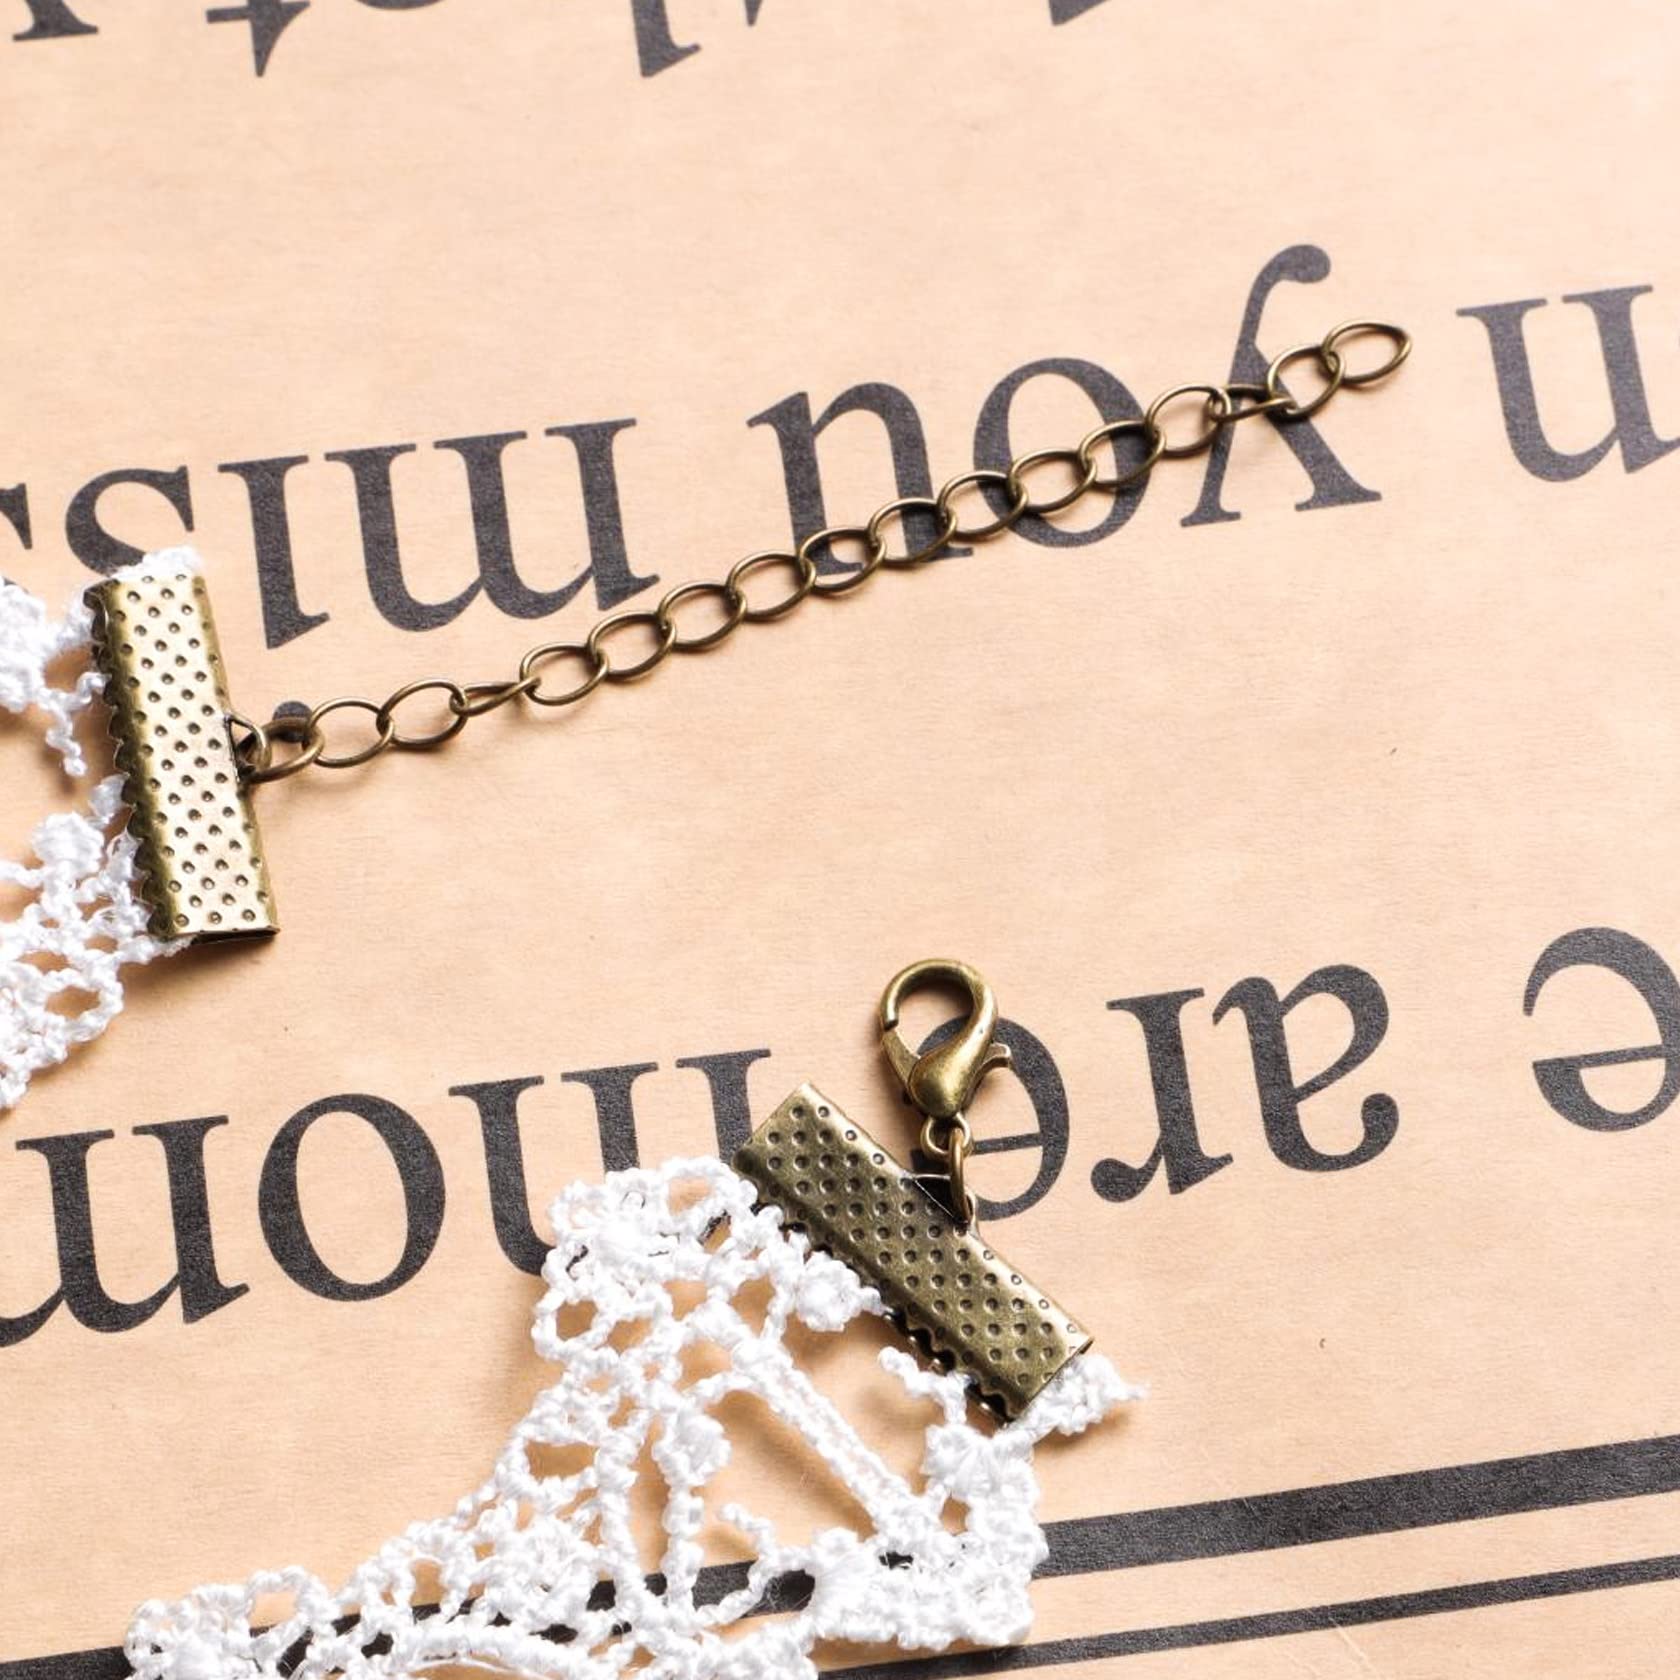 Milakoo Women Choker and Bracelet Ring Set Lace Necklace Gothic Vintage Charm Pendant Beads Jewelry